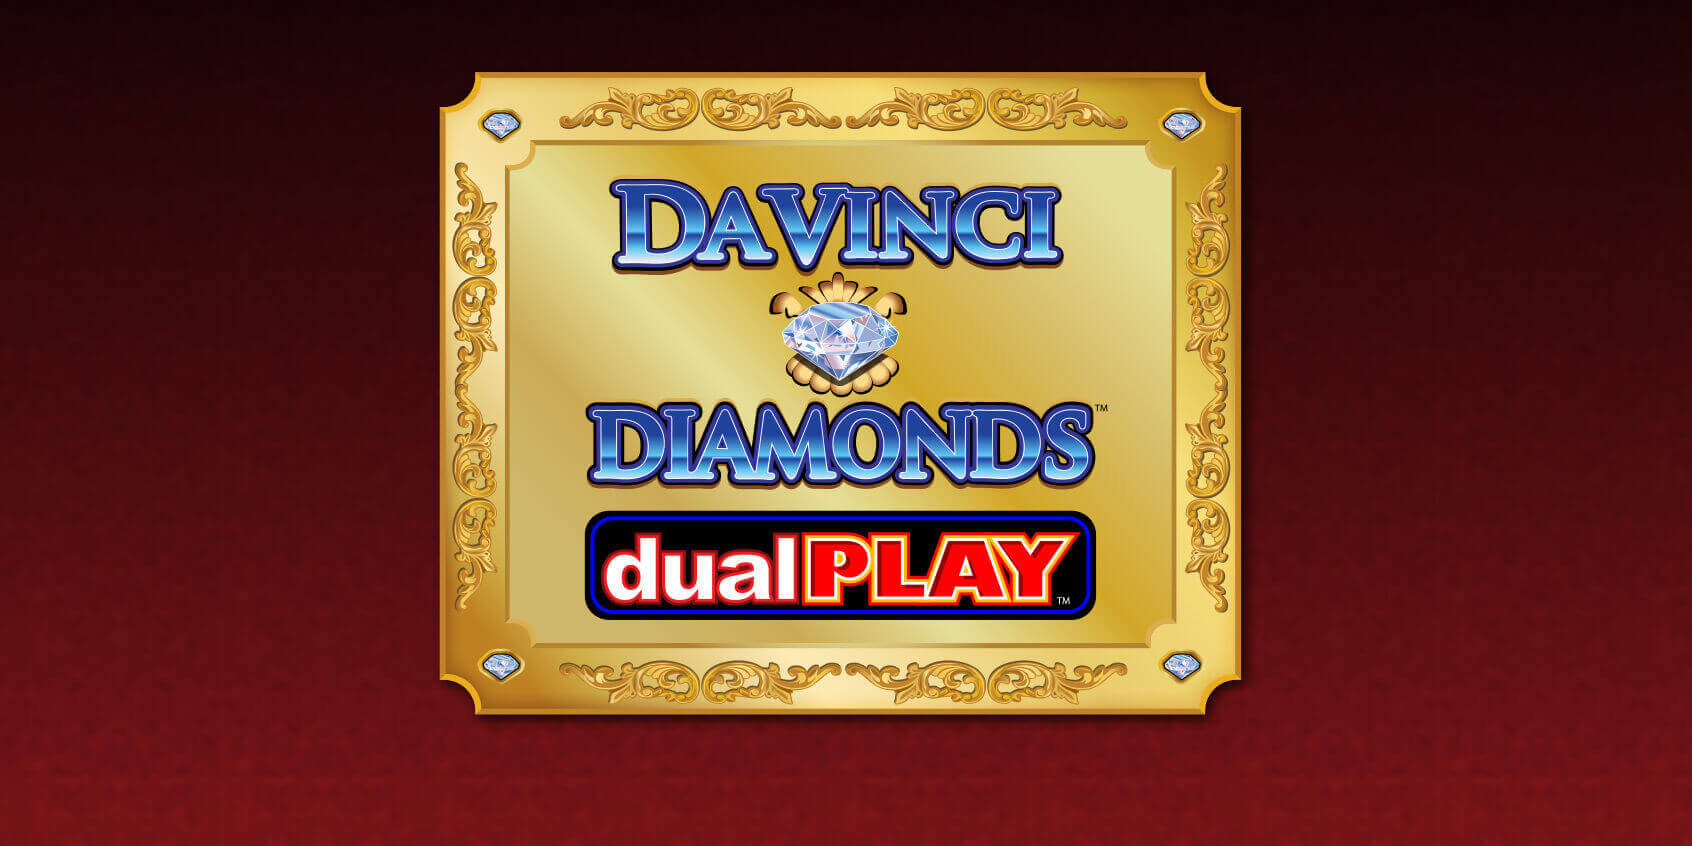 davinci diamonds dual play